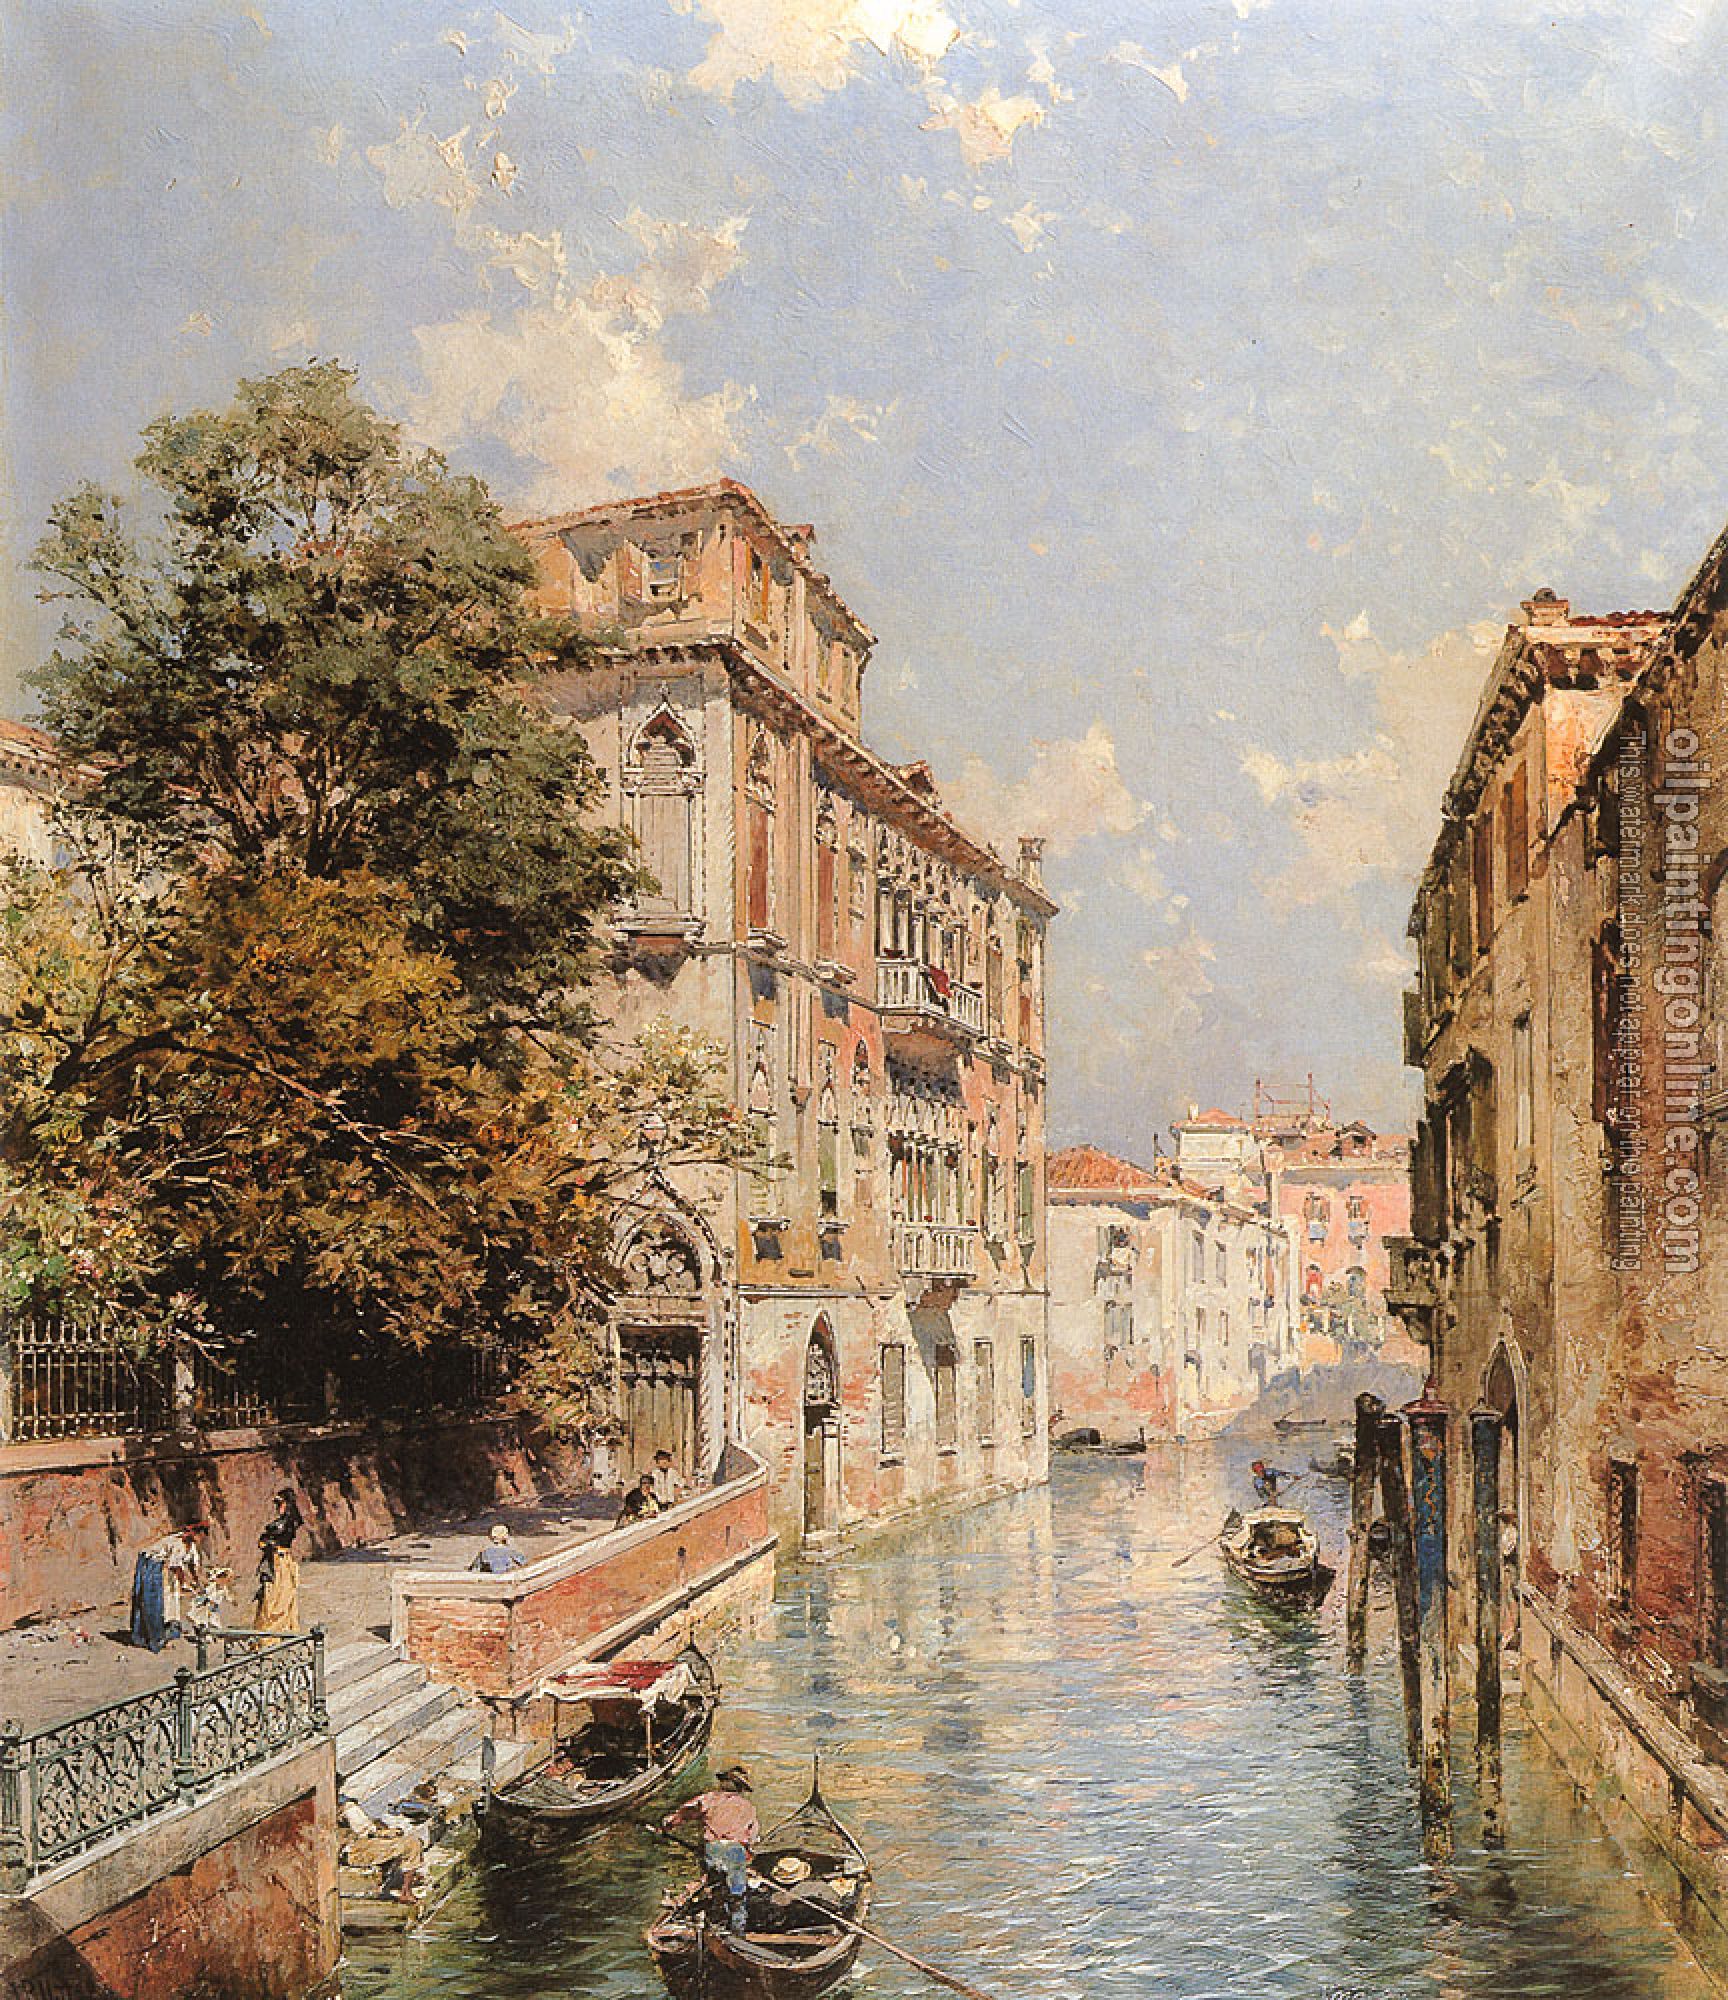 Unterberger, Franz Richard - A View in Venice